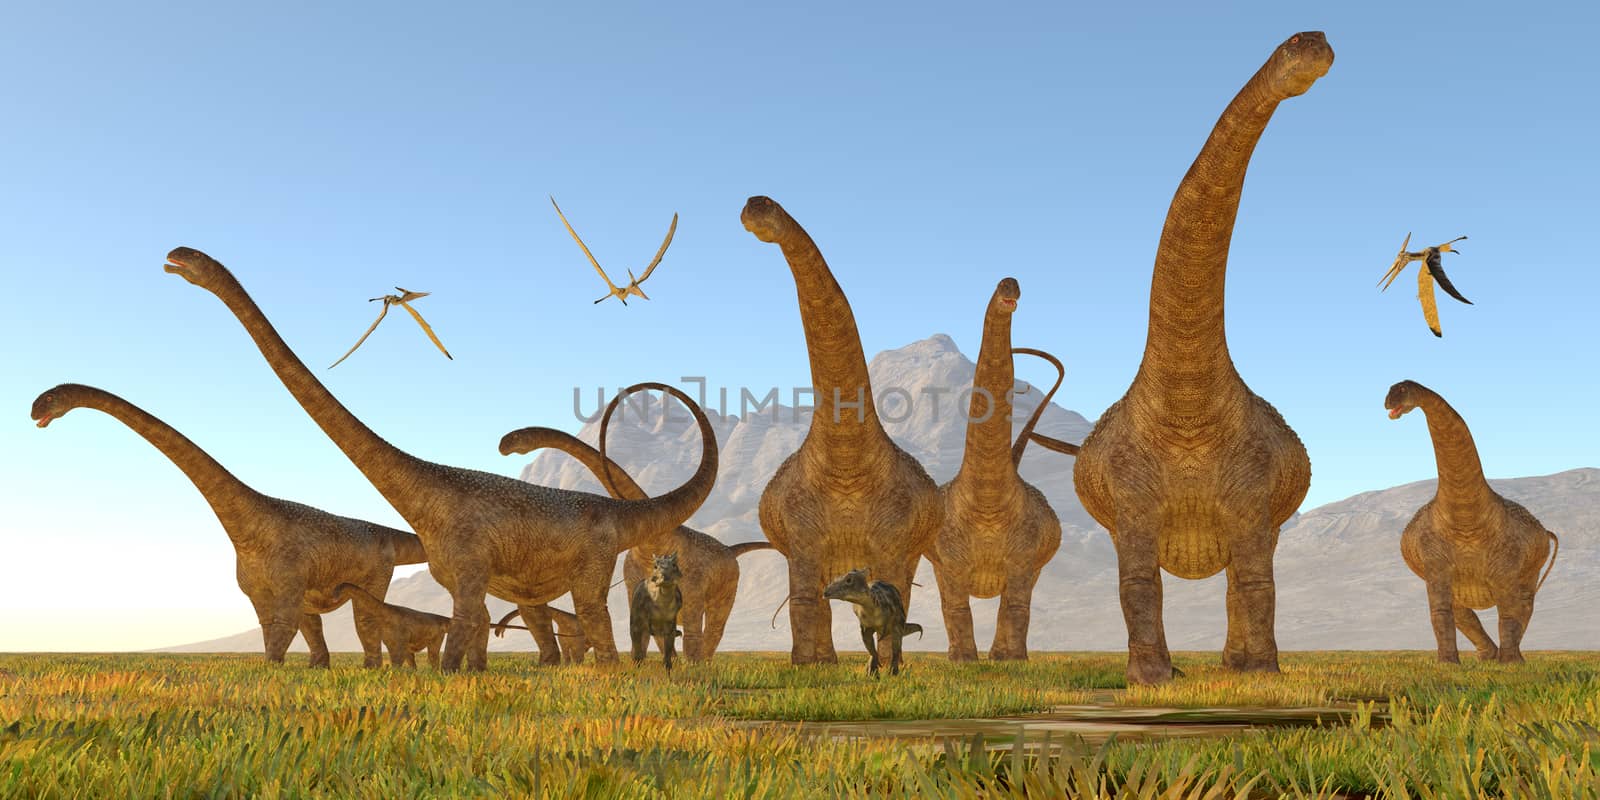 Malawisaurus Dinosaurs by Catmando